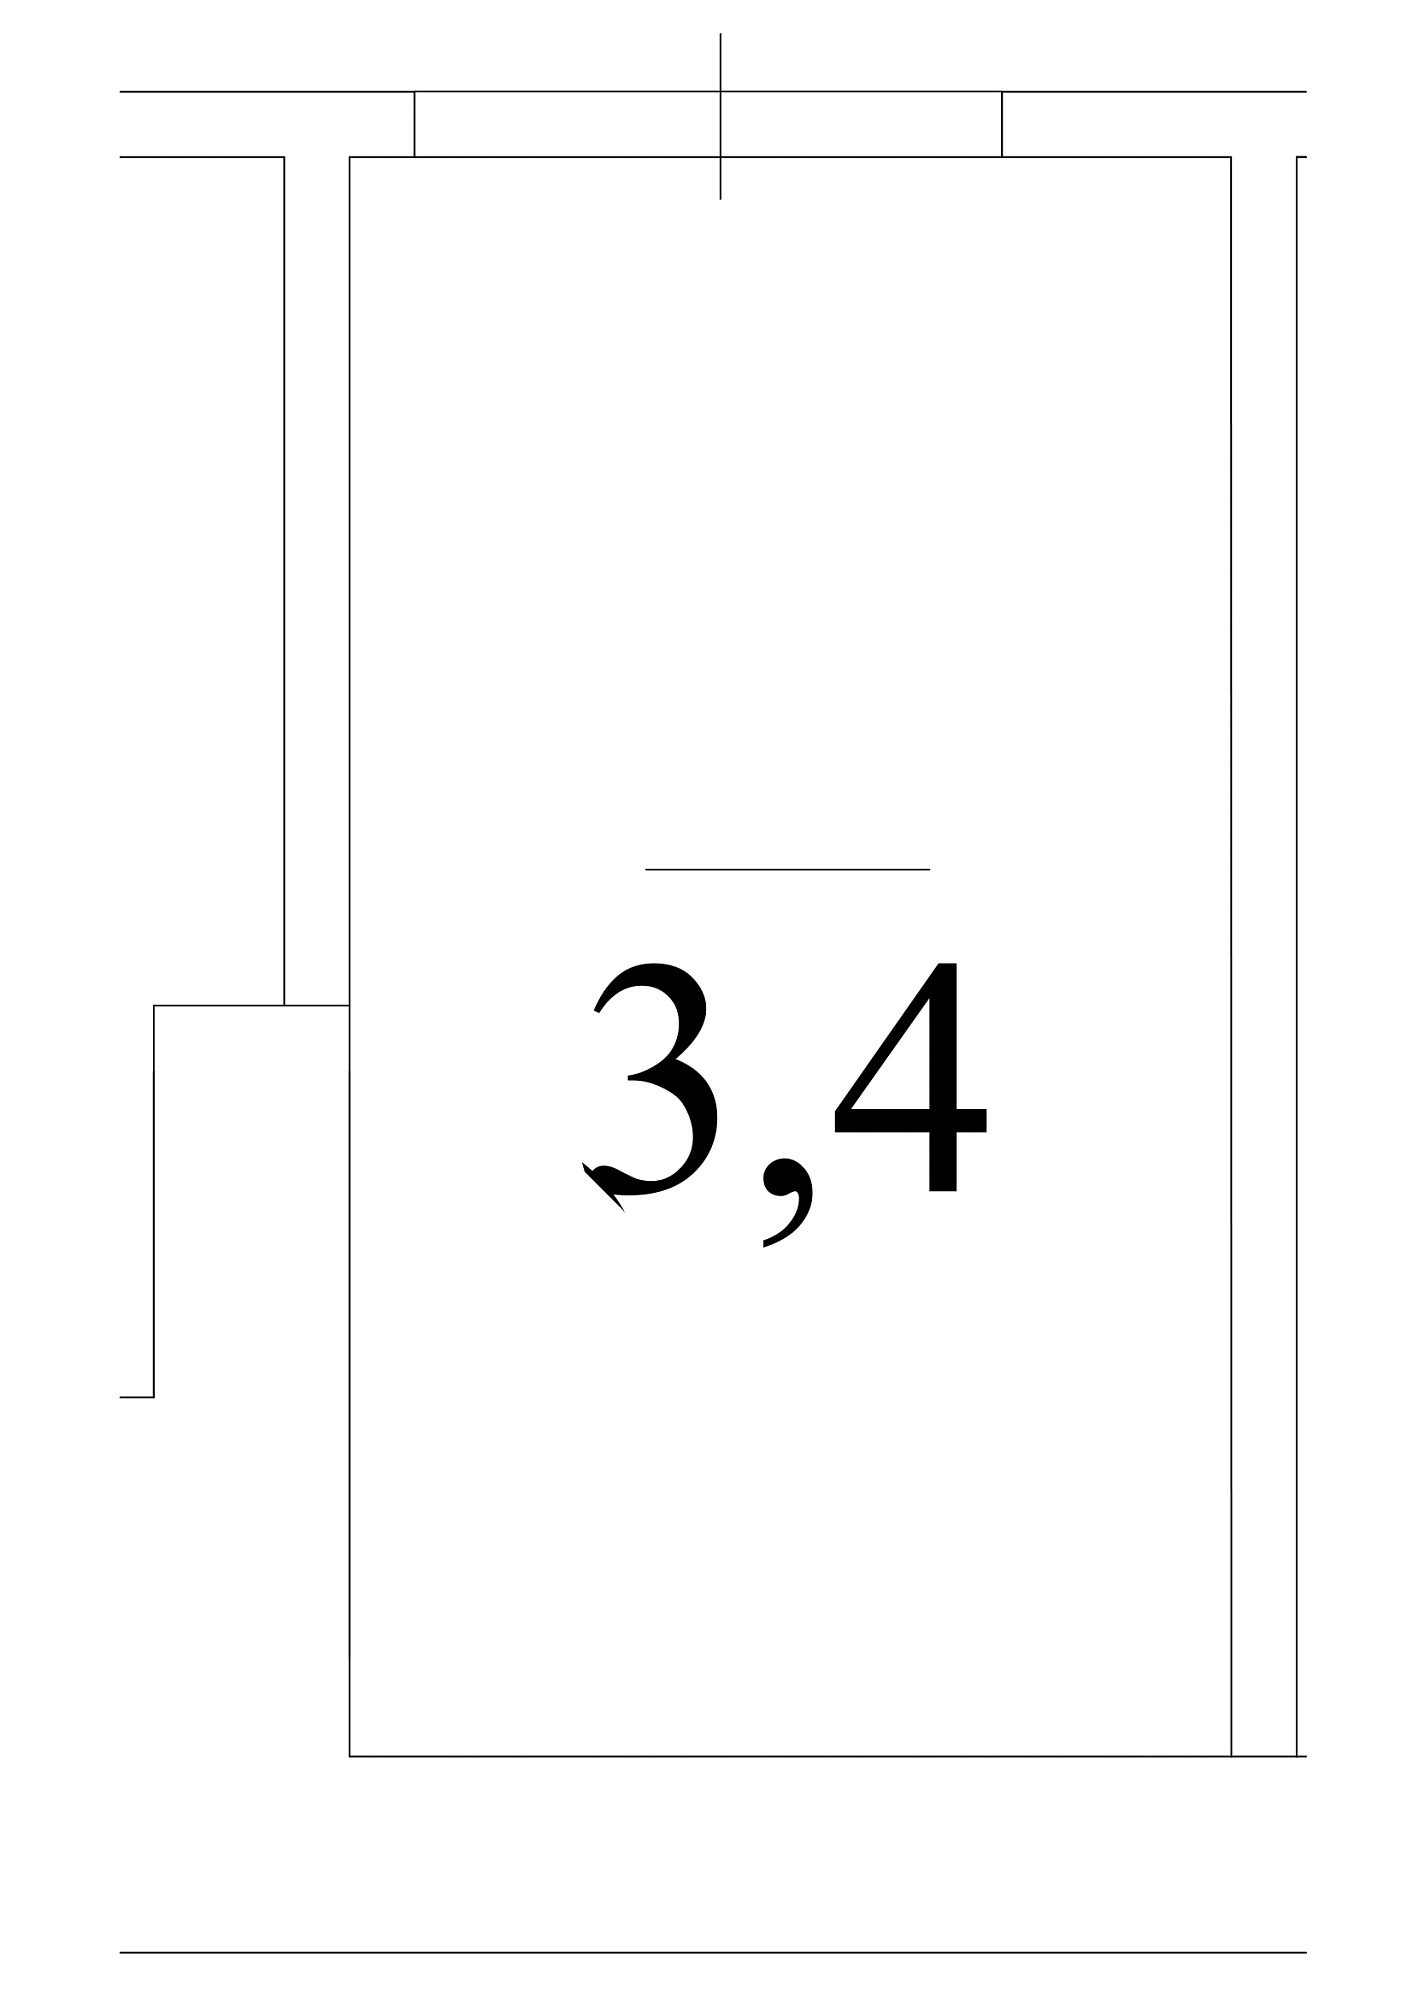 Planning Storeroom area 3.4m2, AB-13-м1/К0059.